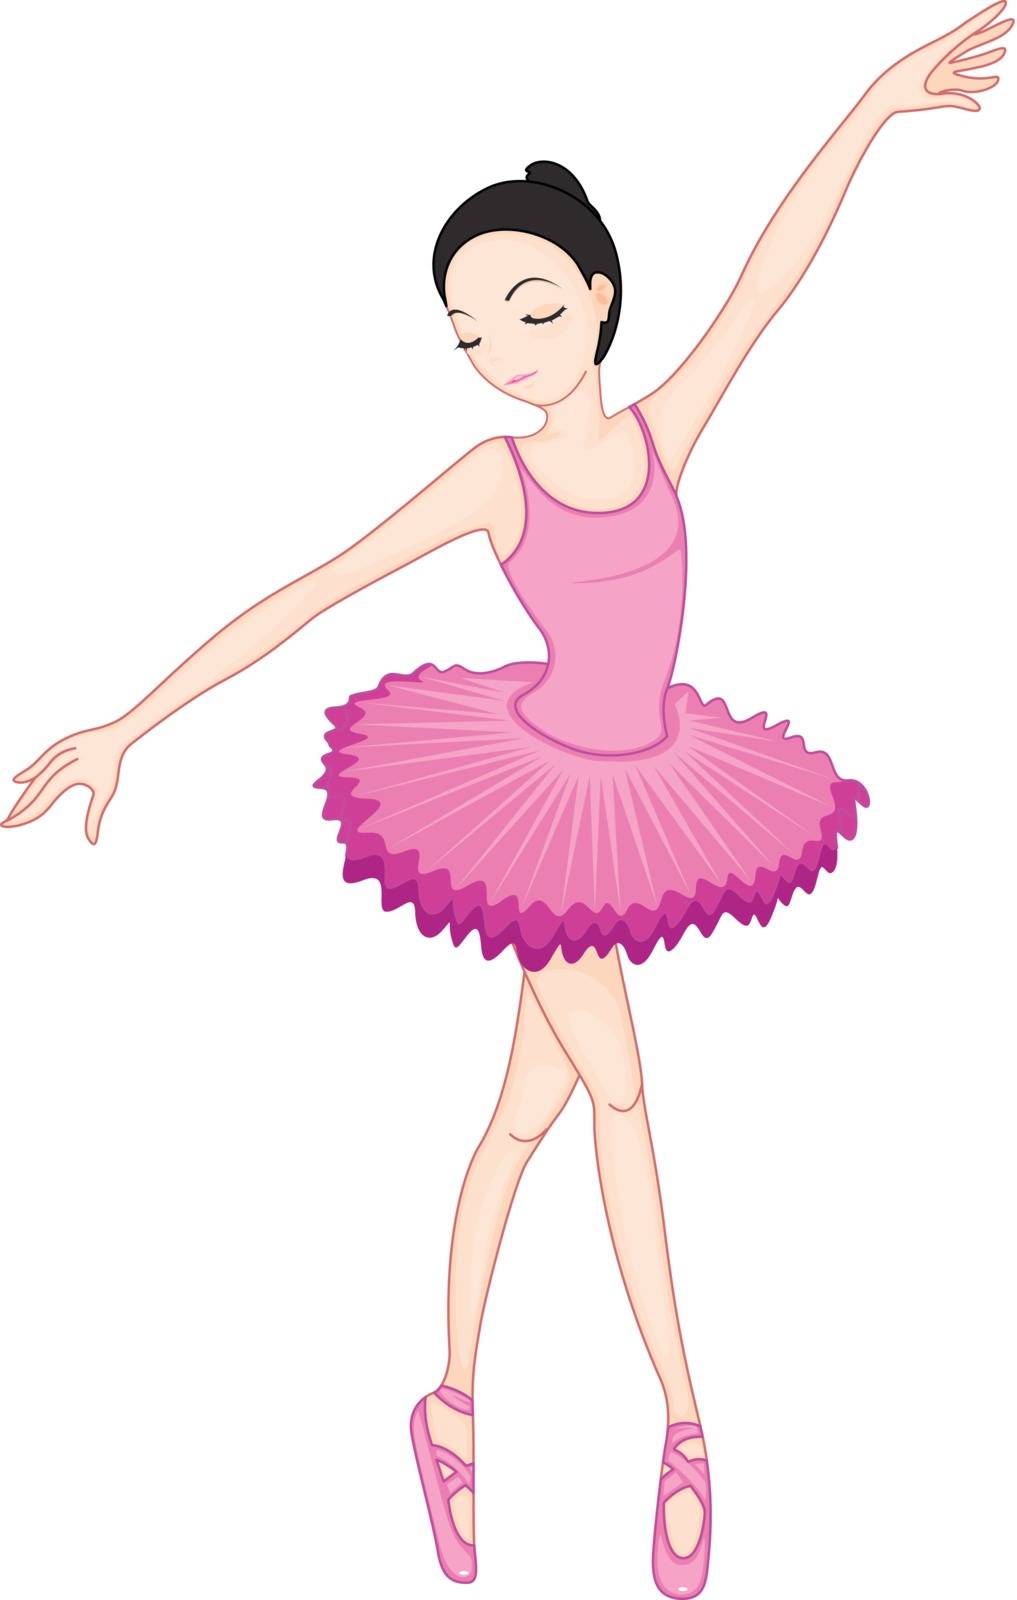 Illustration of a ballerina pose on white